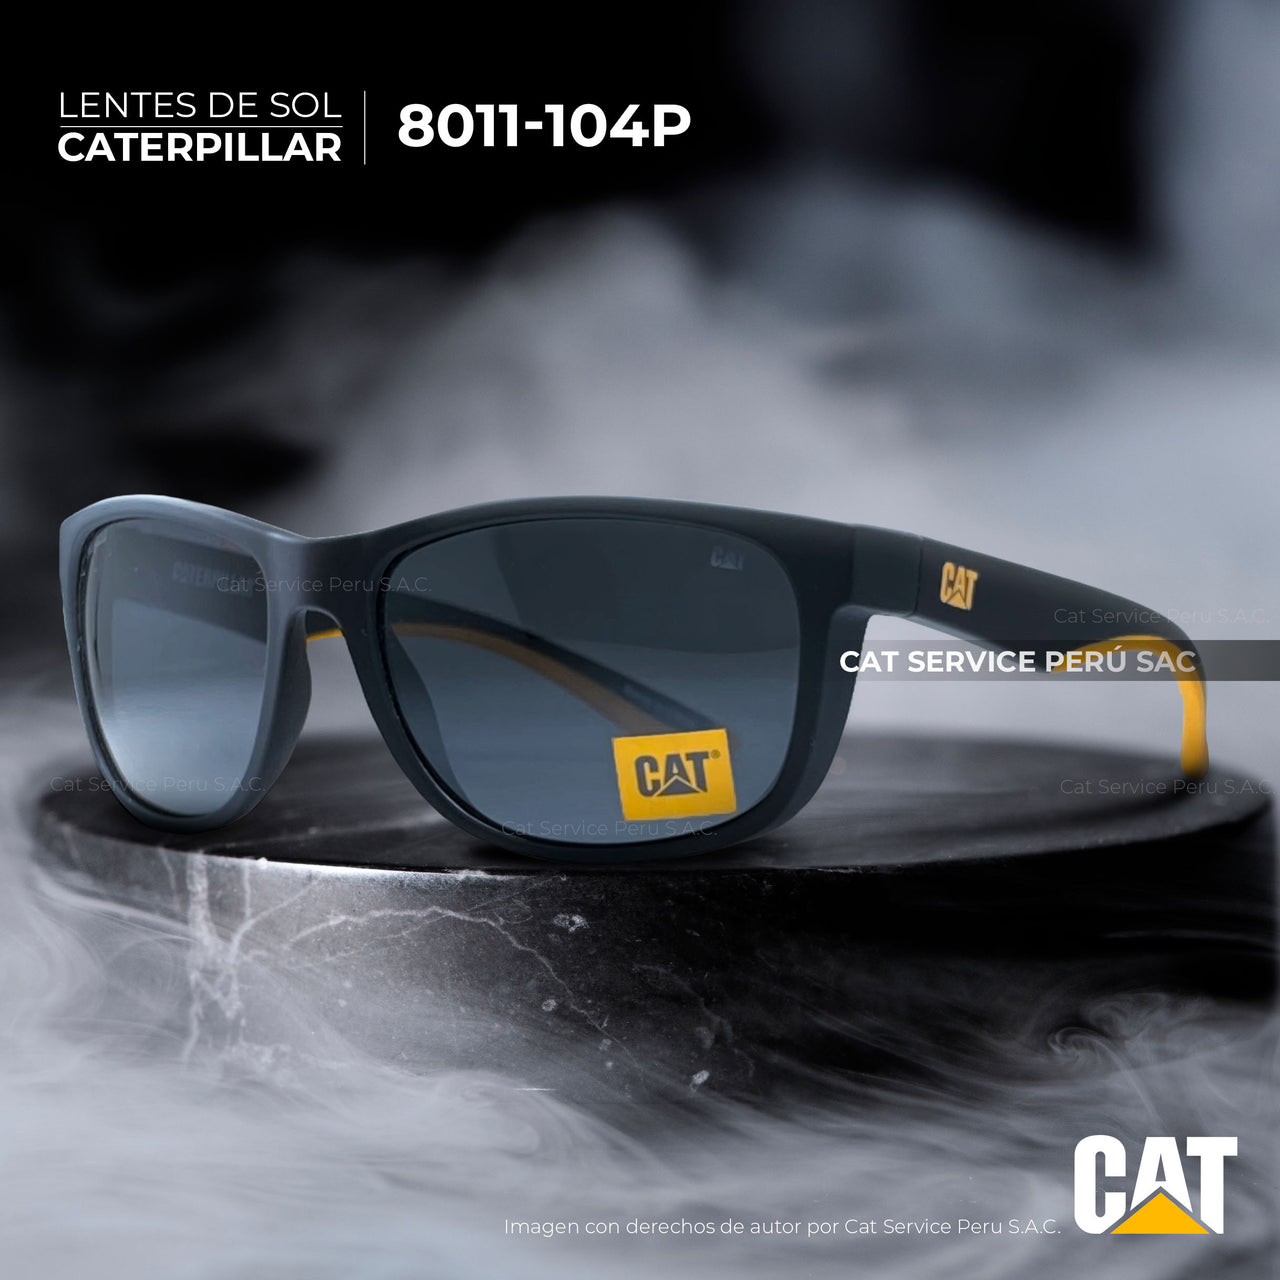 Cat CTS-8011-104P Polarized Black Moons Sunglasses 